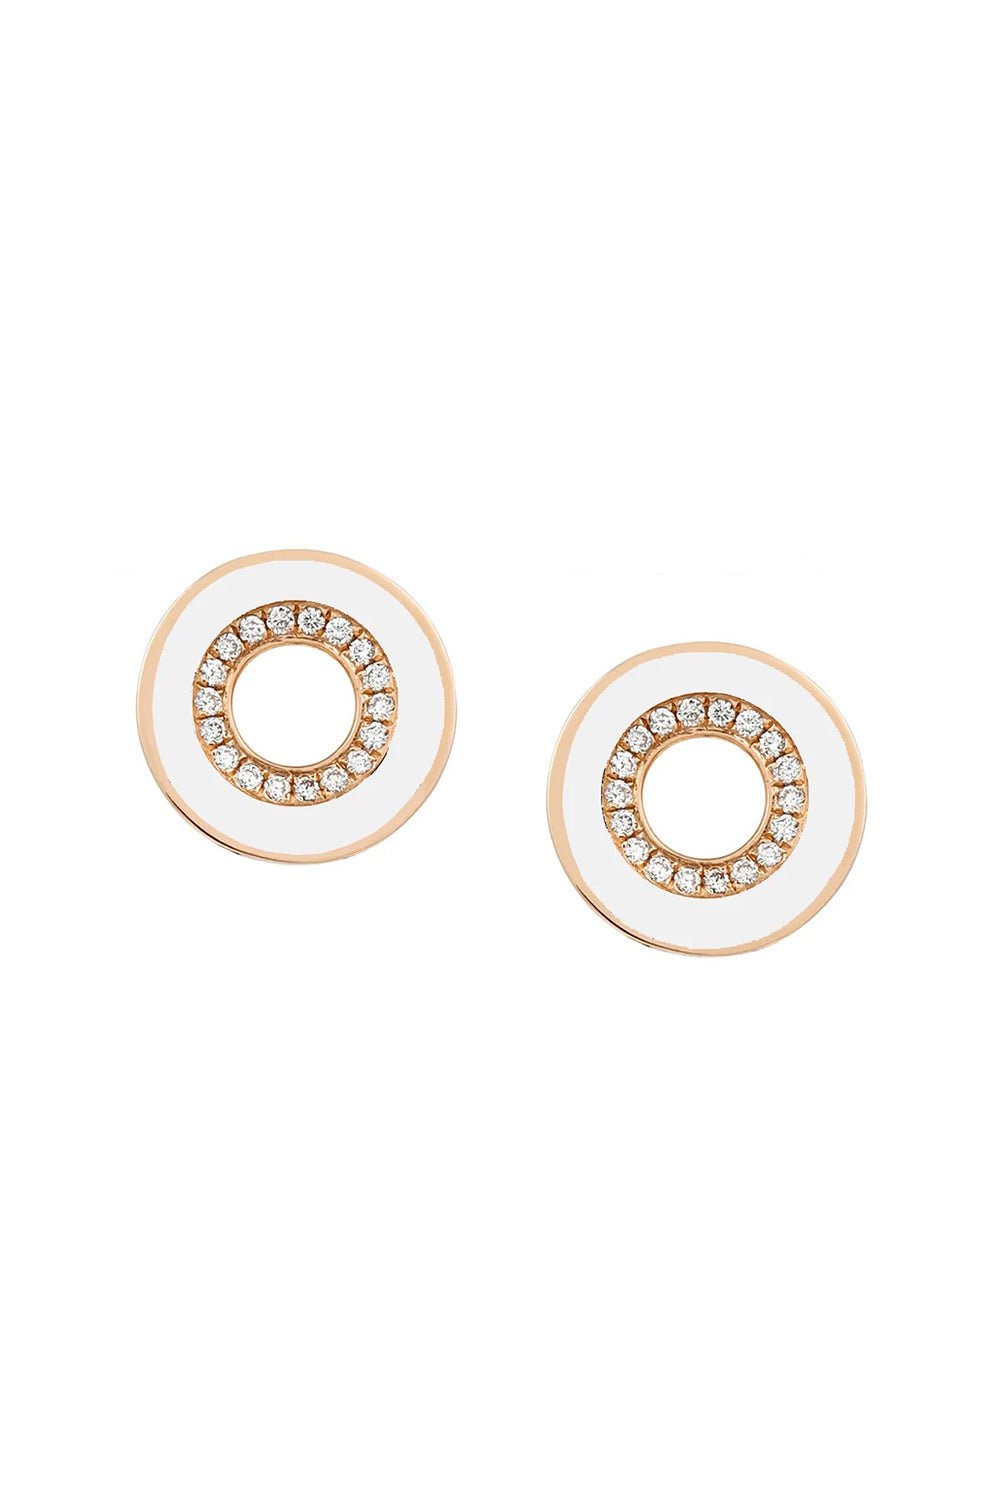 STATE PROPERTY-Rinzo Bone White Earrings-ROSE GOLD